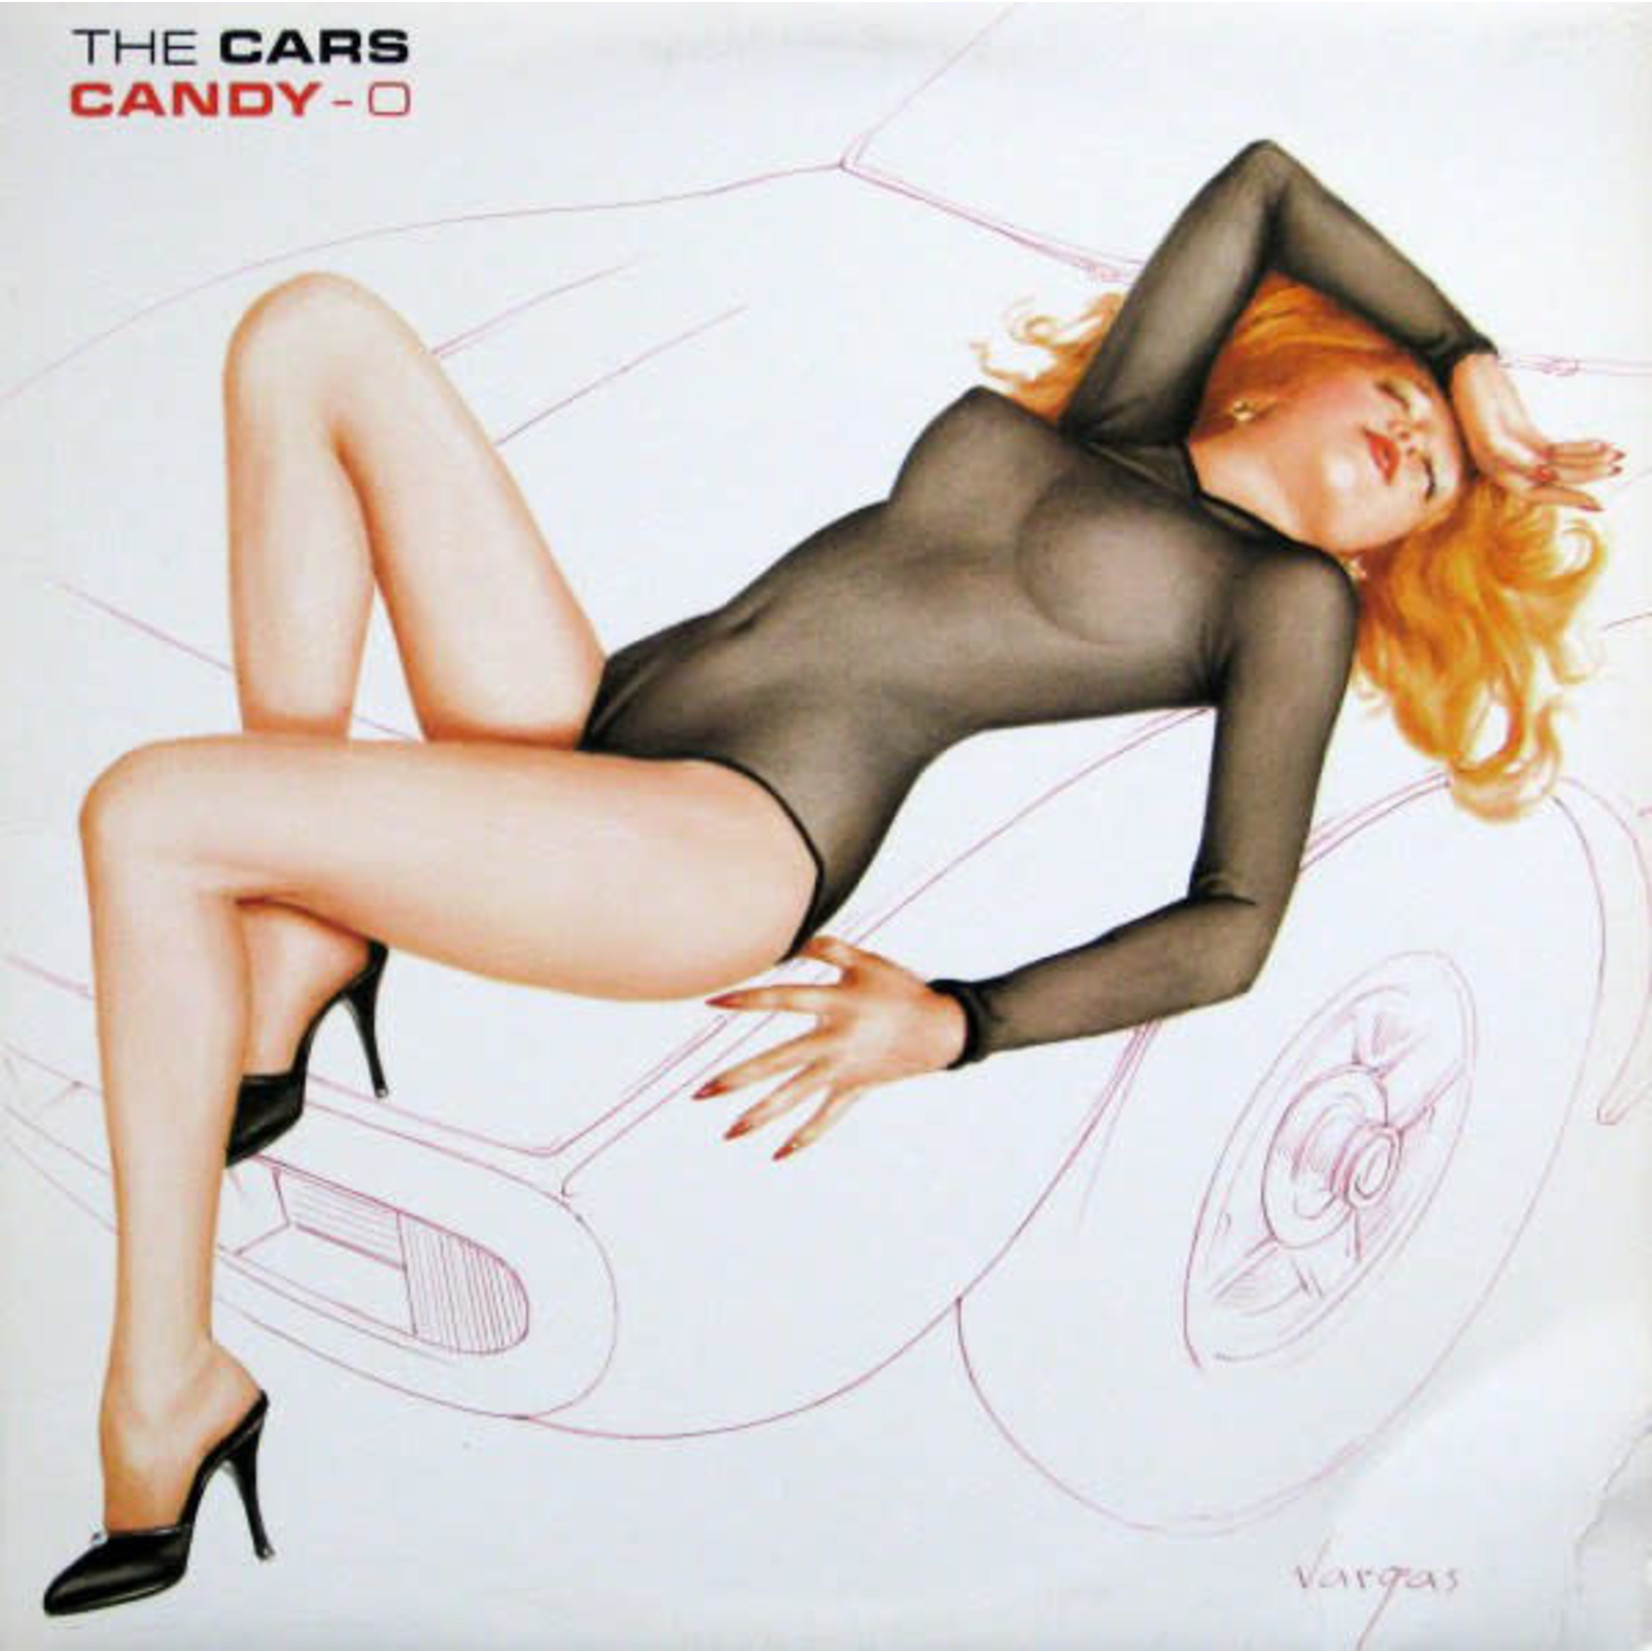 The Cars The Cars - Candy-O (G, 1979, LP, Elektra – X5E-507, Canada)